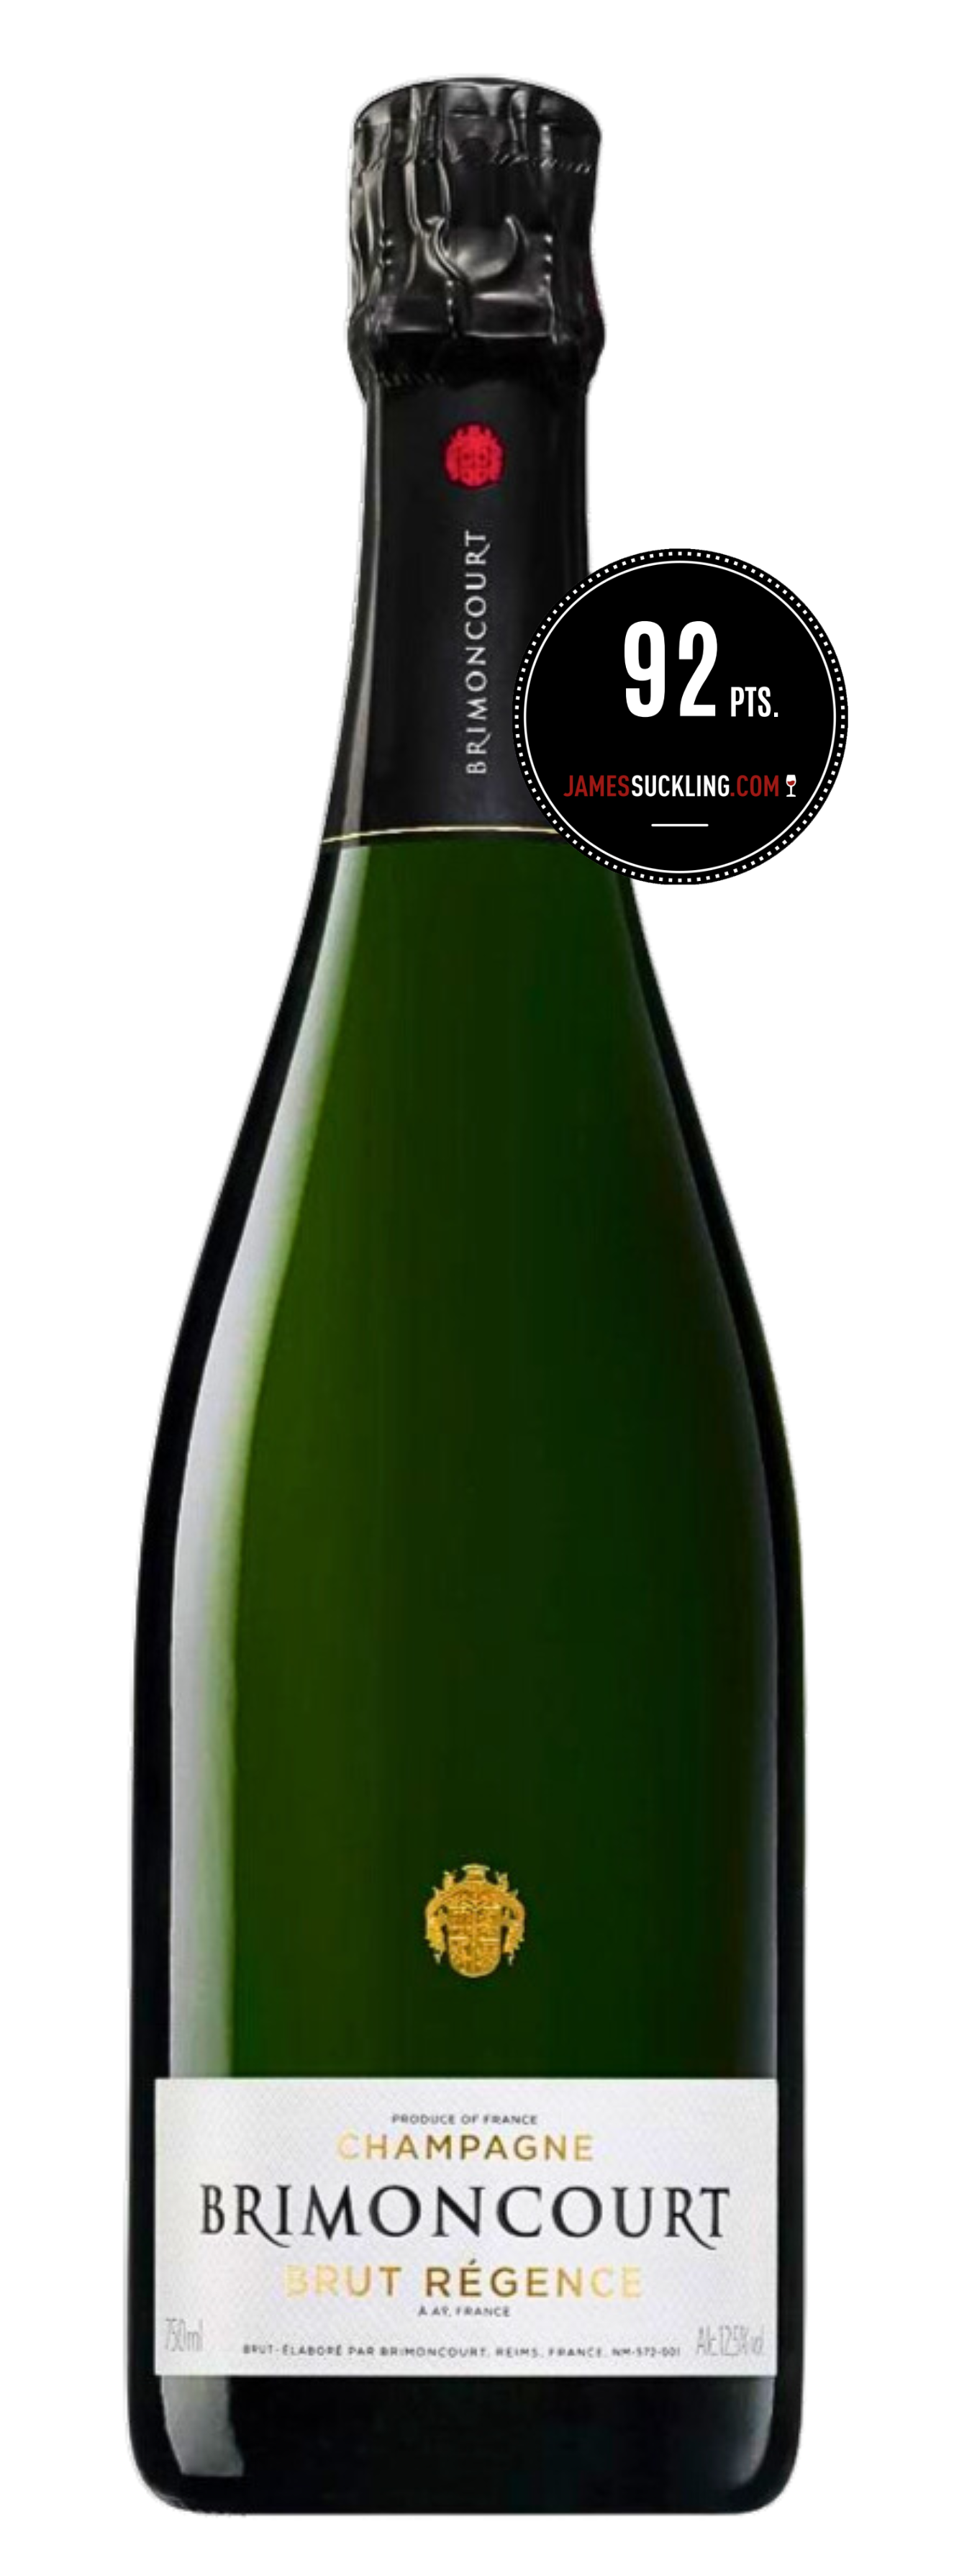 Champagne Brimoncourt Cuvee Brut Regence (JS: 92, Best Sommelier of the World MS Gérard Basset: 94 points)